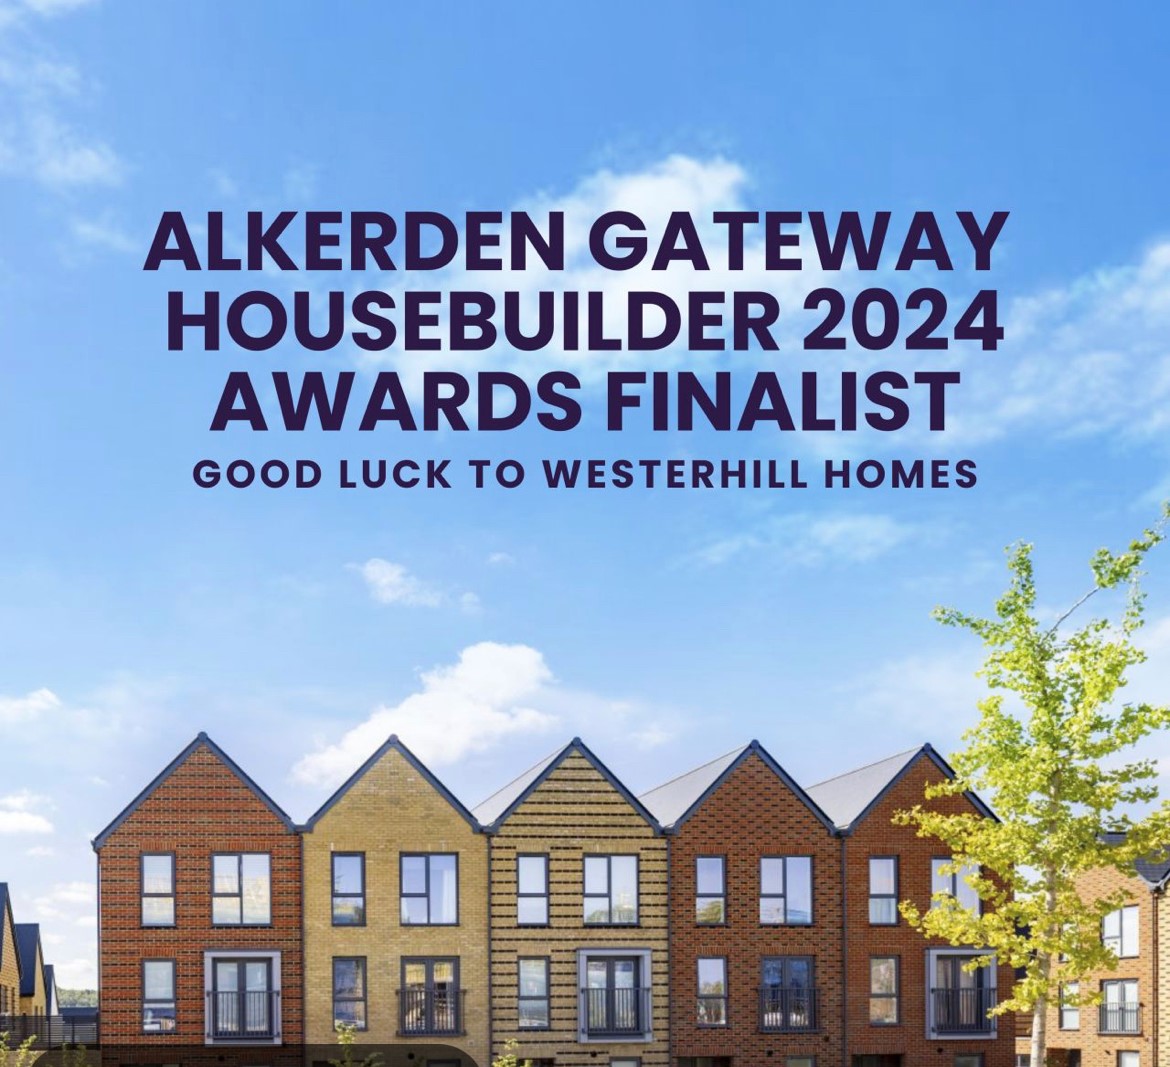 Alkerden Gateway Housebuilder 2024 Awards Finalist